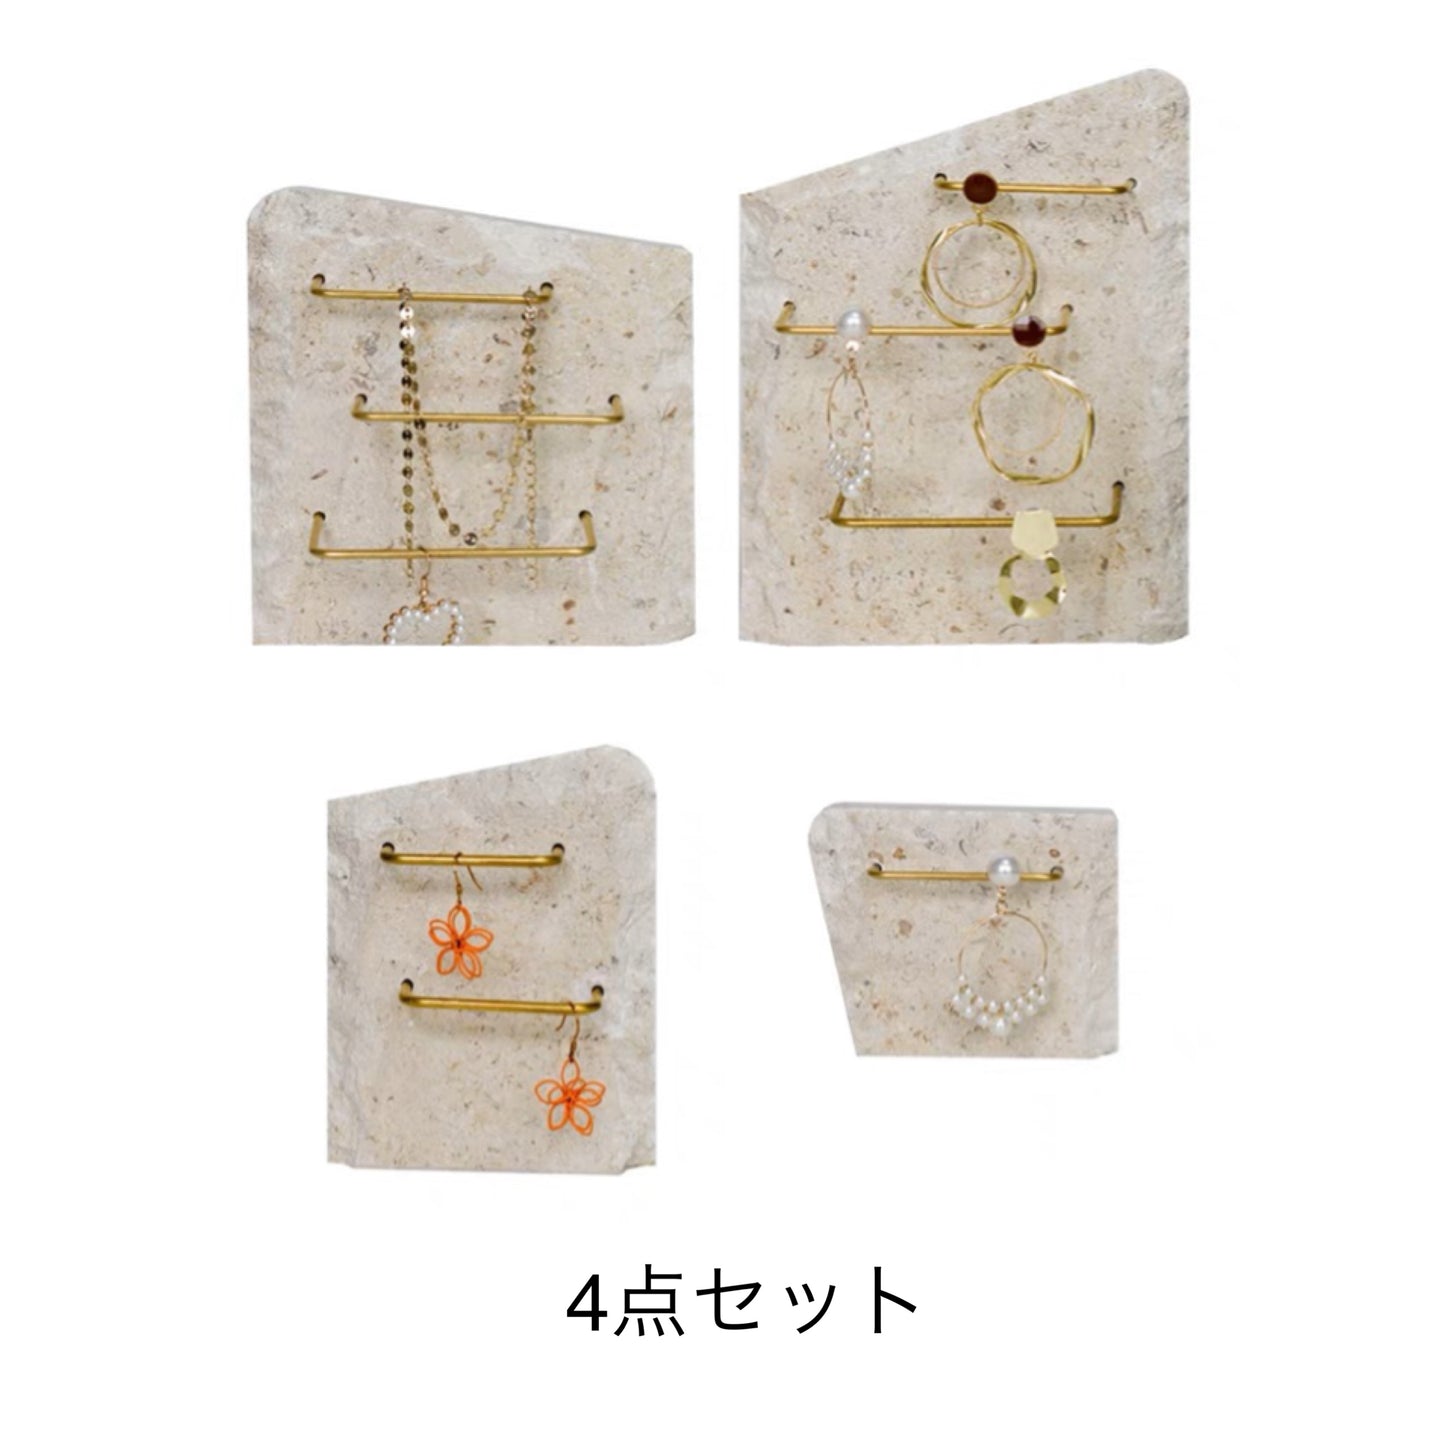 stone brass jewelry stand